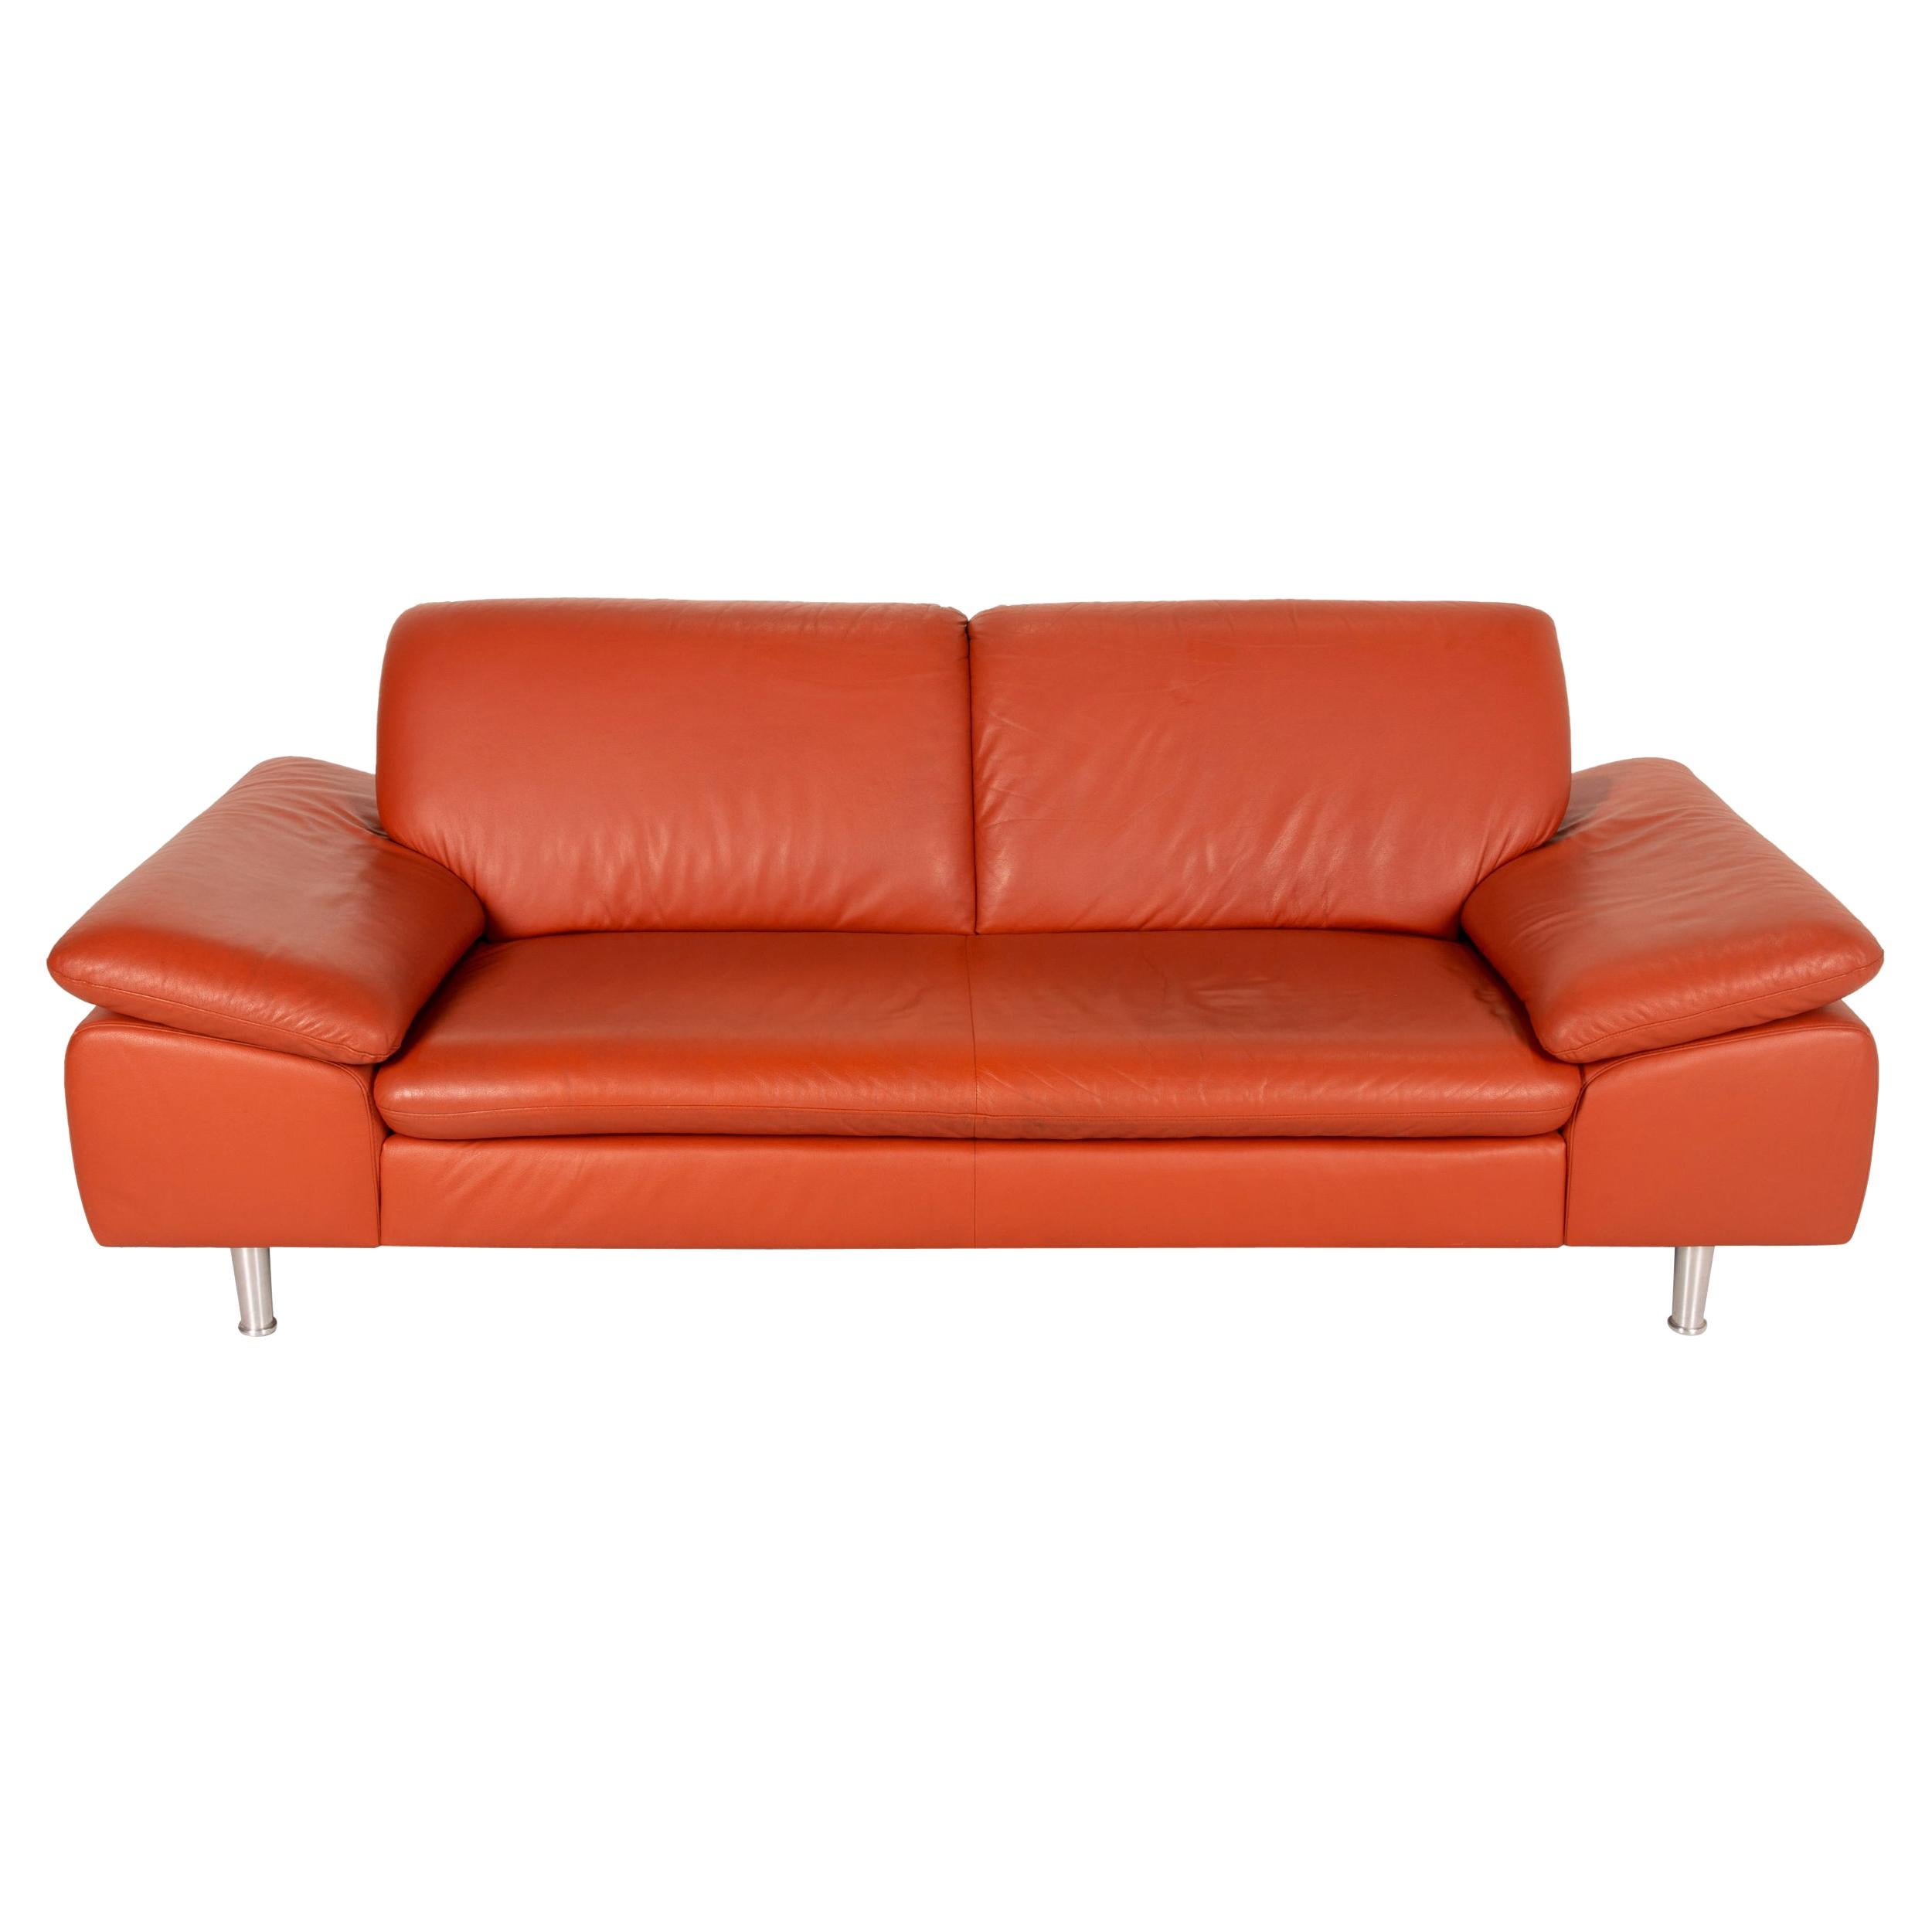 Willi Schillig Loop Leather Sofa Orange Three-Seater Couch